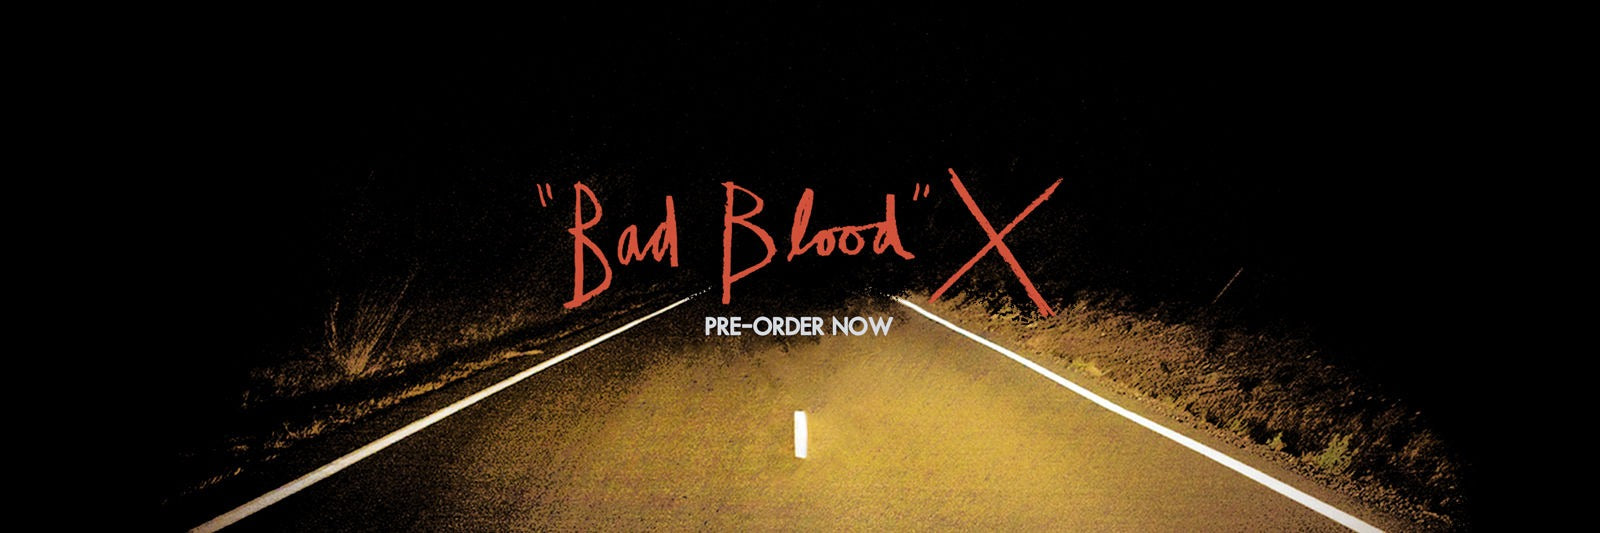 Bad Blood X